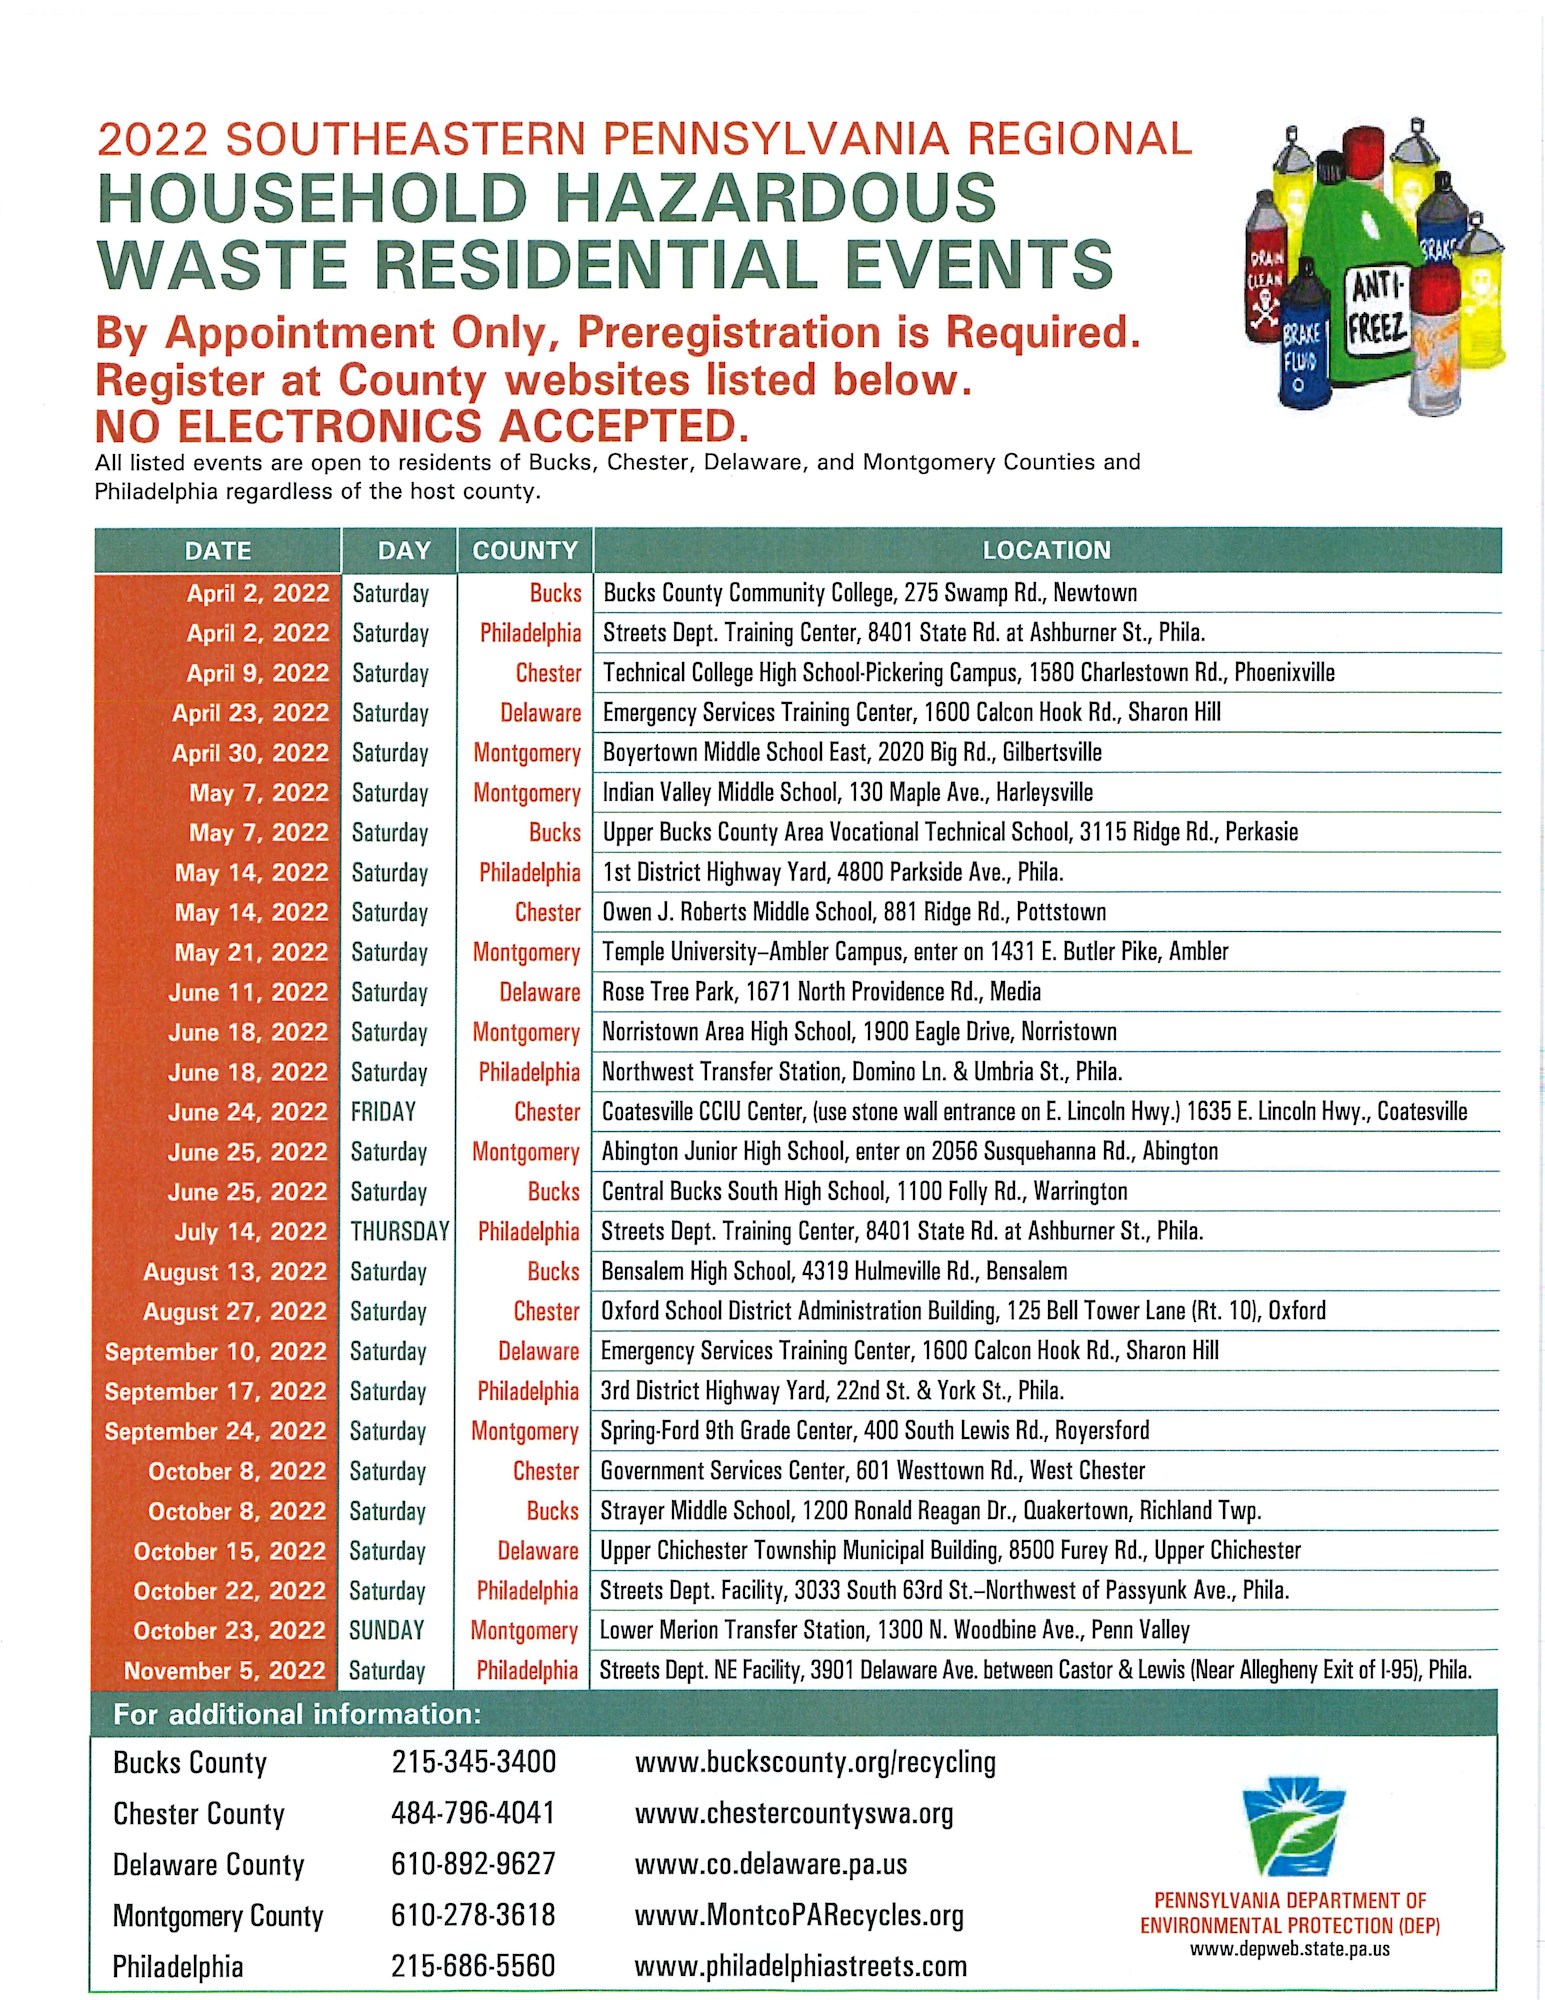 2022 SE PA Regional Household Hazardous Waste Residential Events